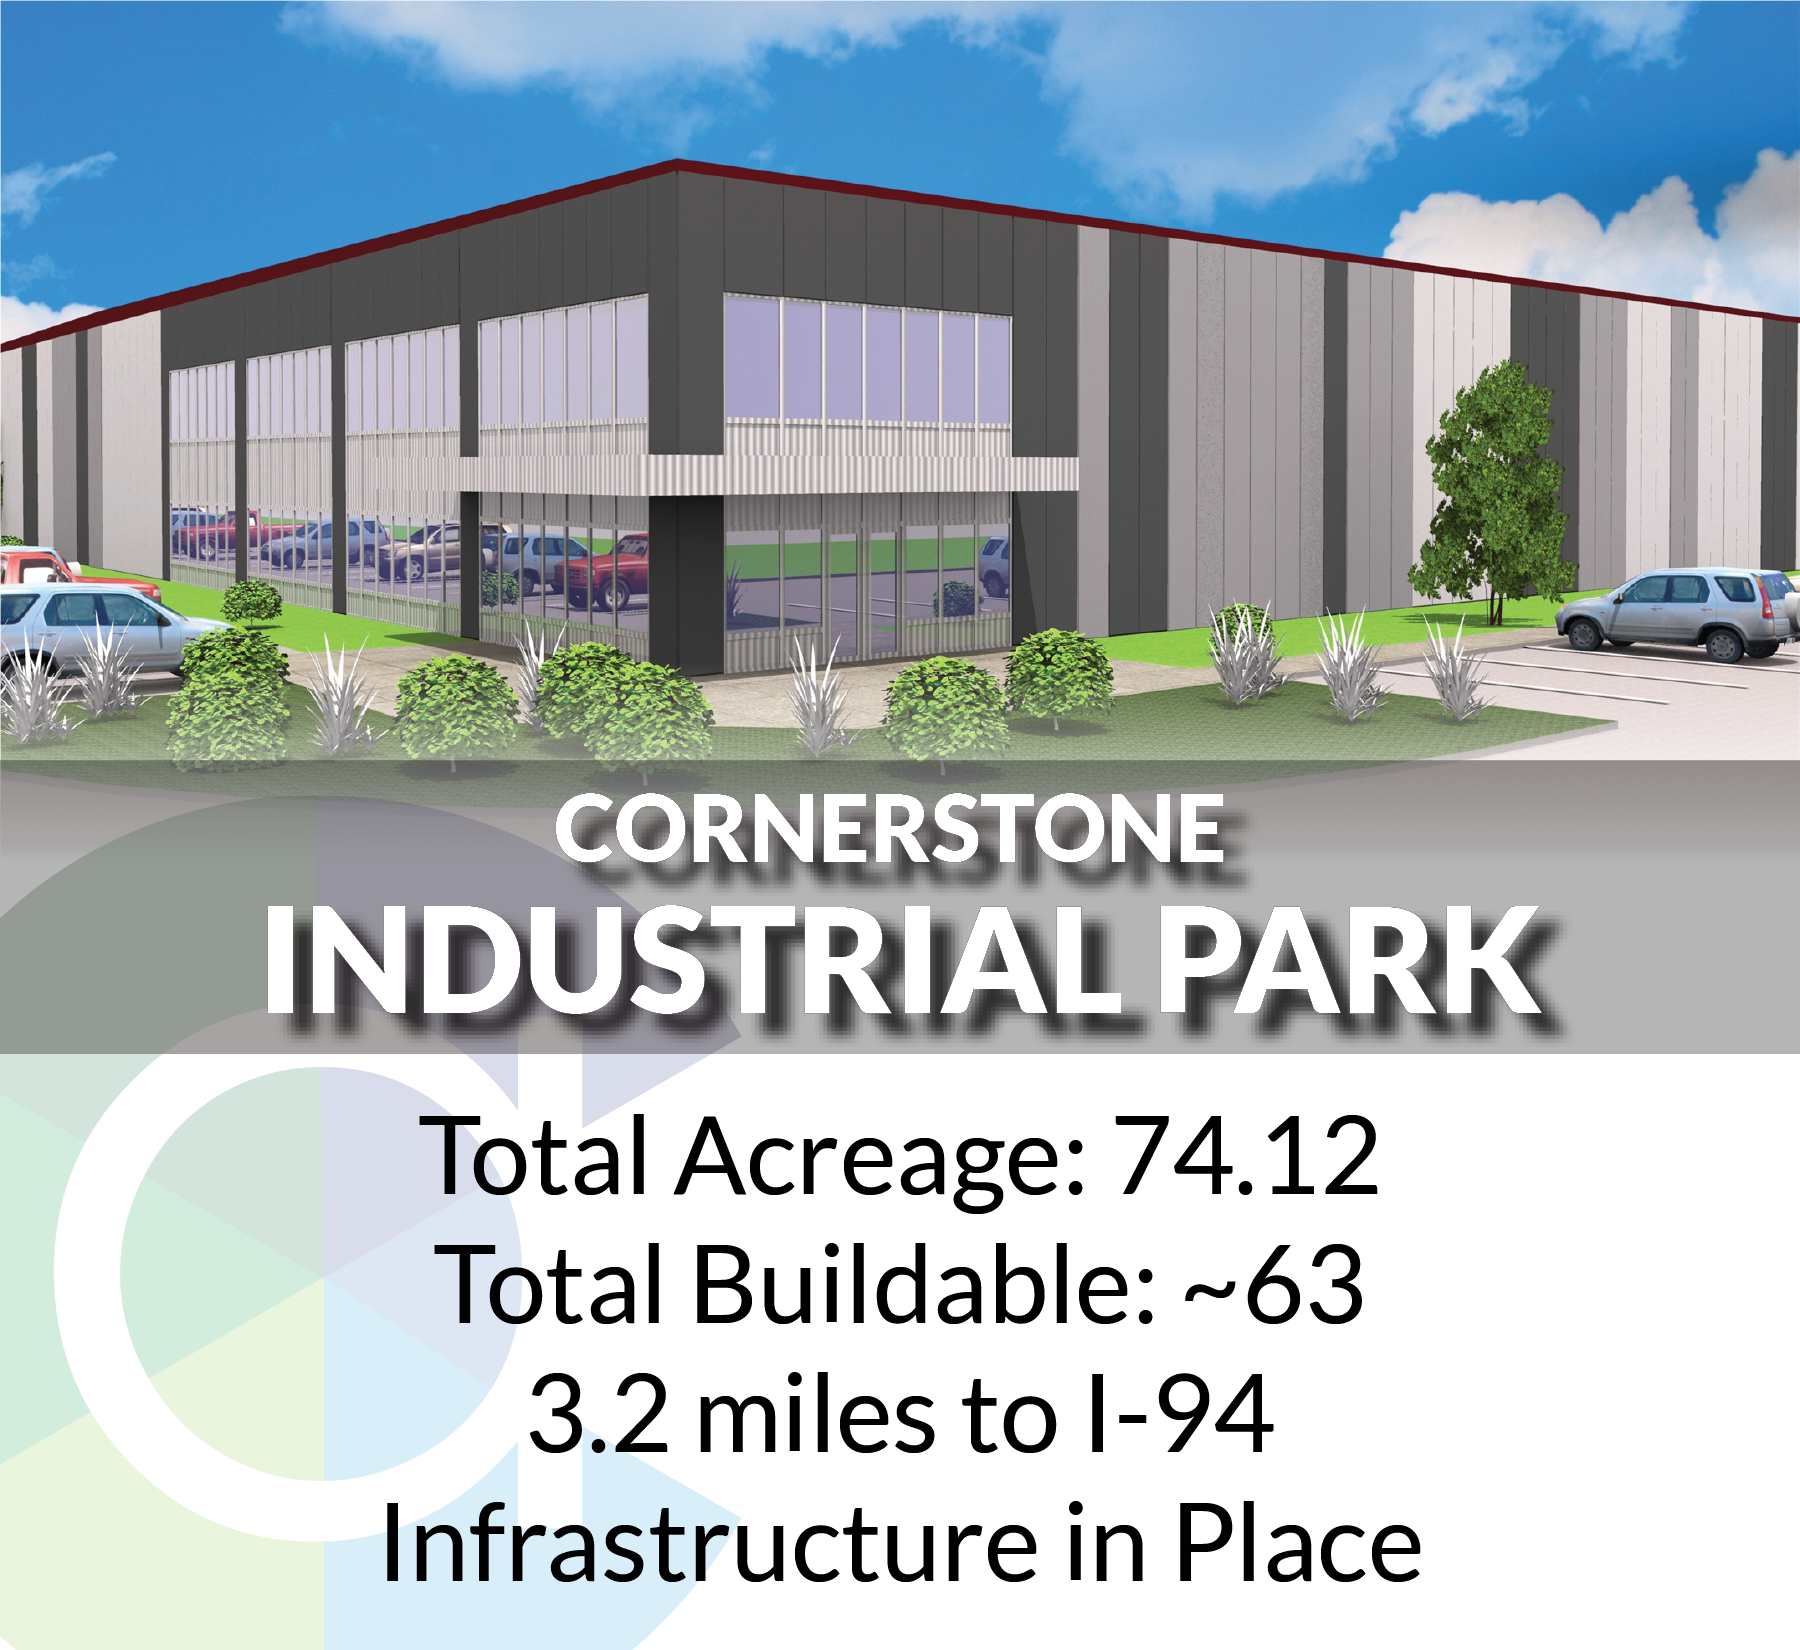 Cornerstone Industrial Park